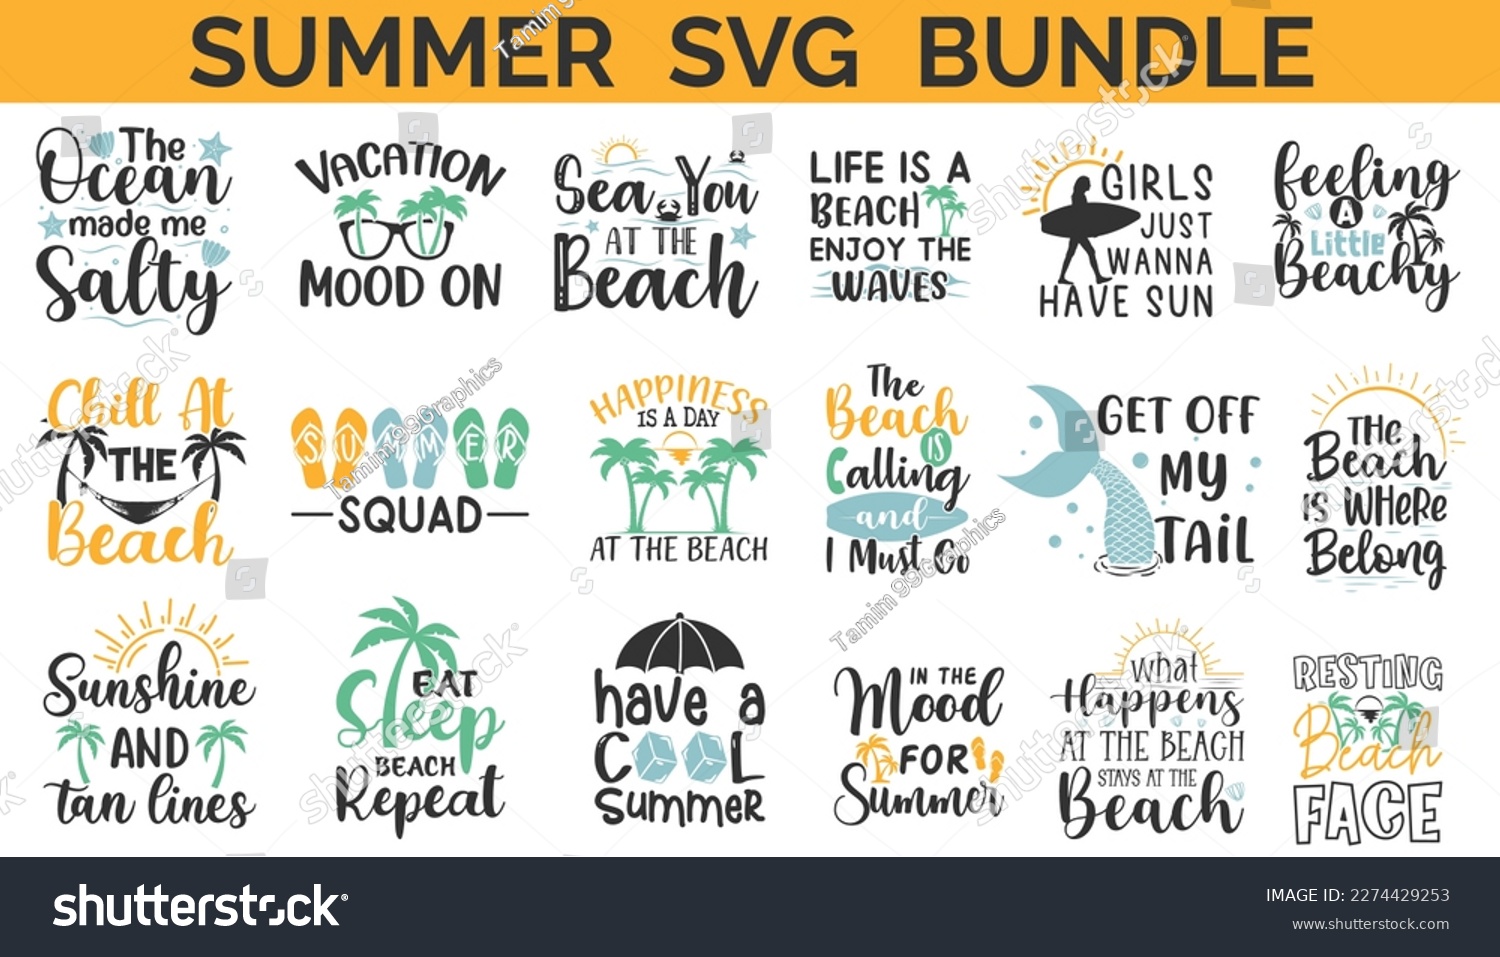 SVG of Summer SVG Bundle with Retro style on White Background.
18 Summer T Shirt Design Bundle.
Beach SVG T Shirt Design Bundle.
Summer Quotes SVG Bundle, Cut files, beach eps file. svg